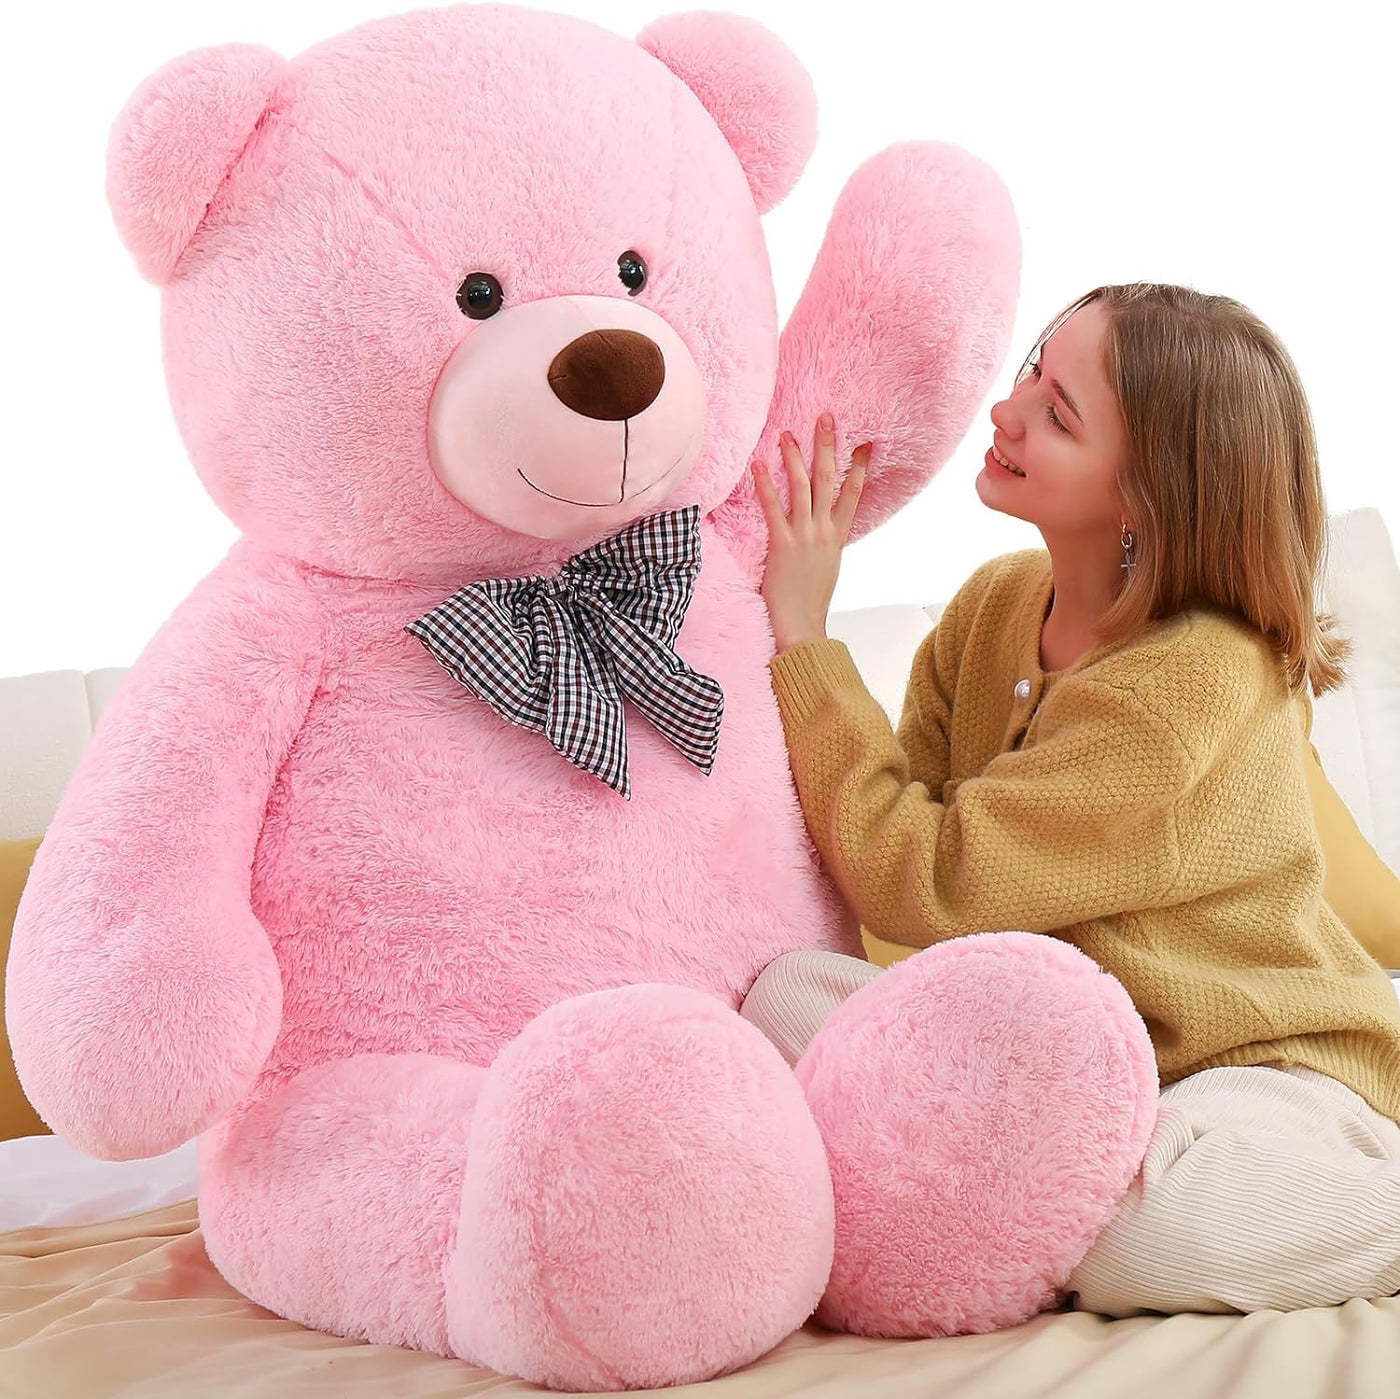 Giant Teddy Bear Stuffed Animal Toy, Pink, 55 Inches - MorisMos Plush Toys